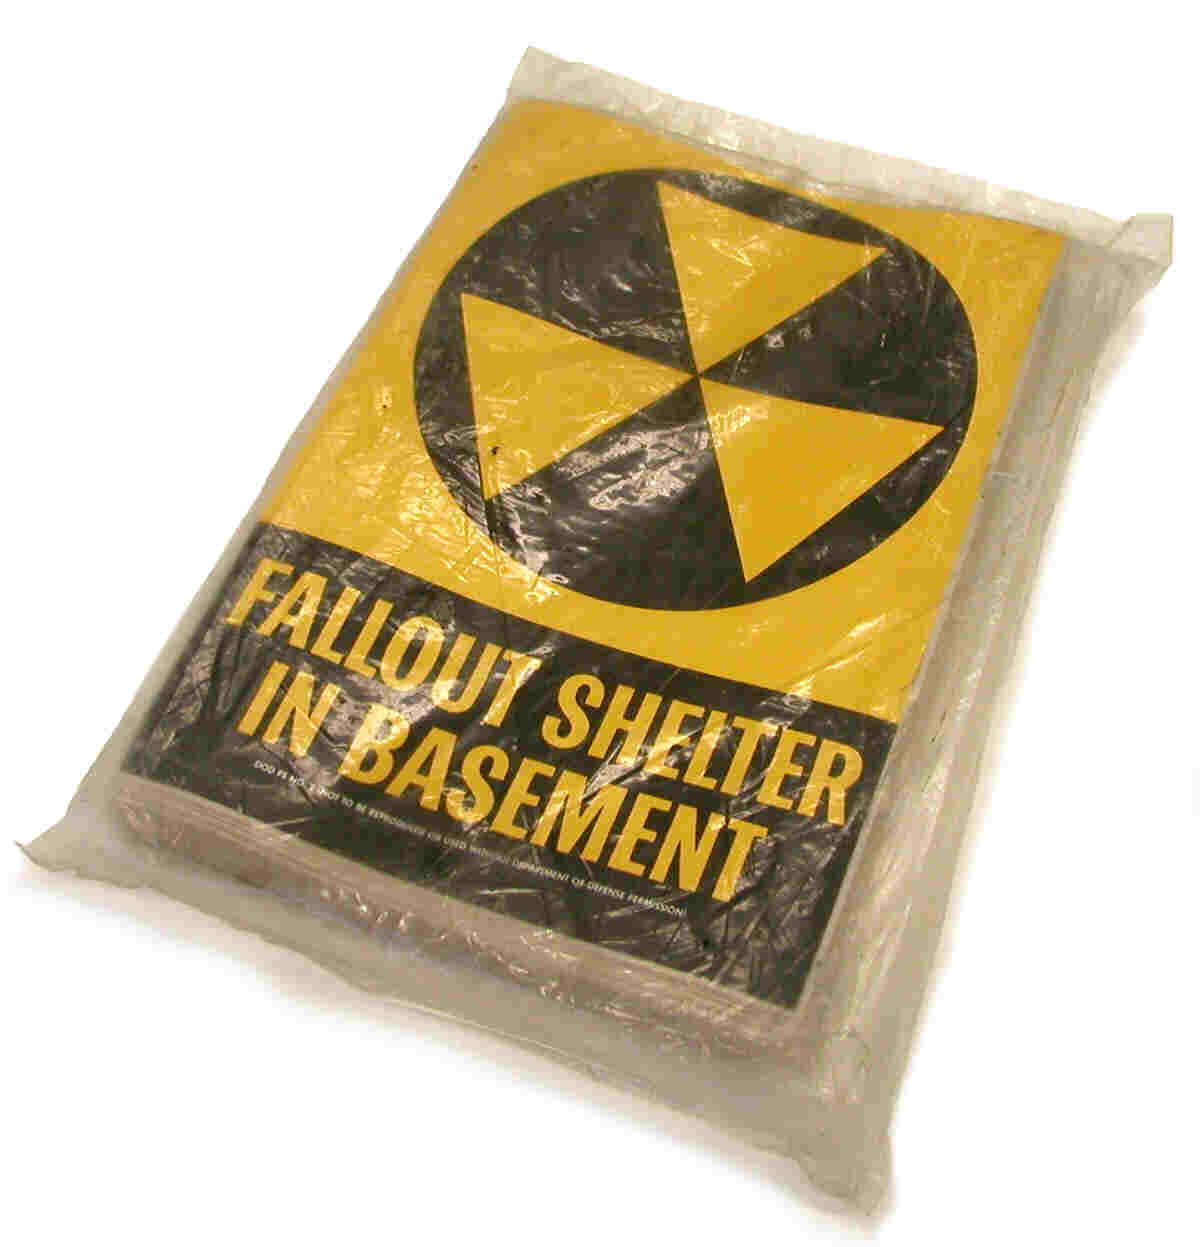 Civil Defense Fallout Shelter Sign